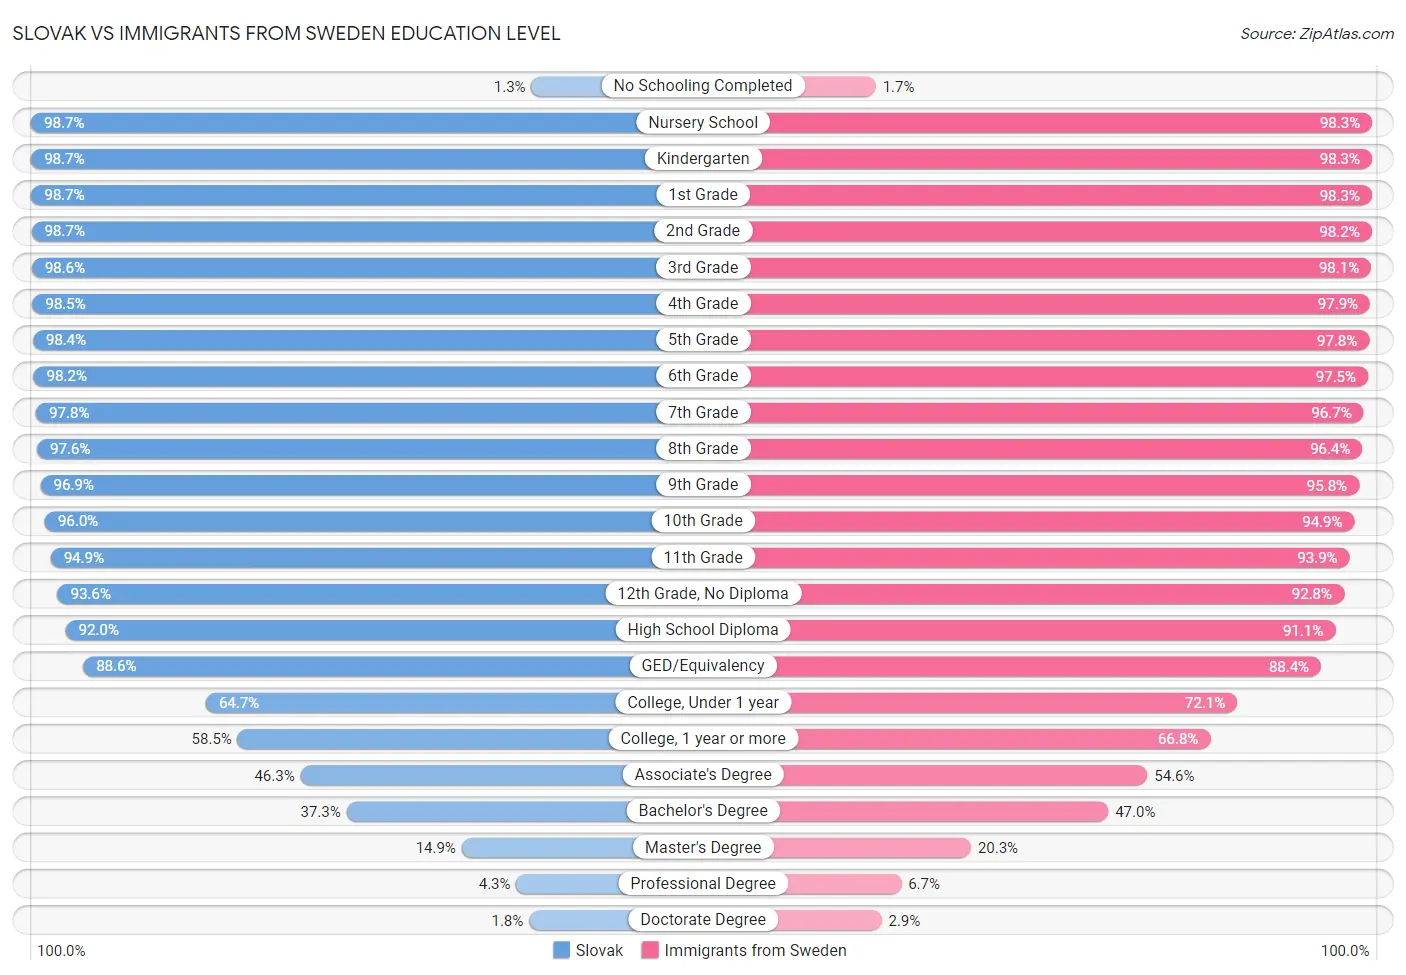 Slovak vs Immigrants from Sweden Education Level